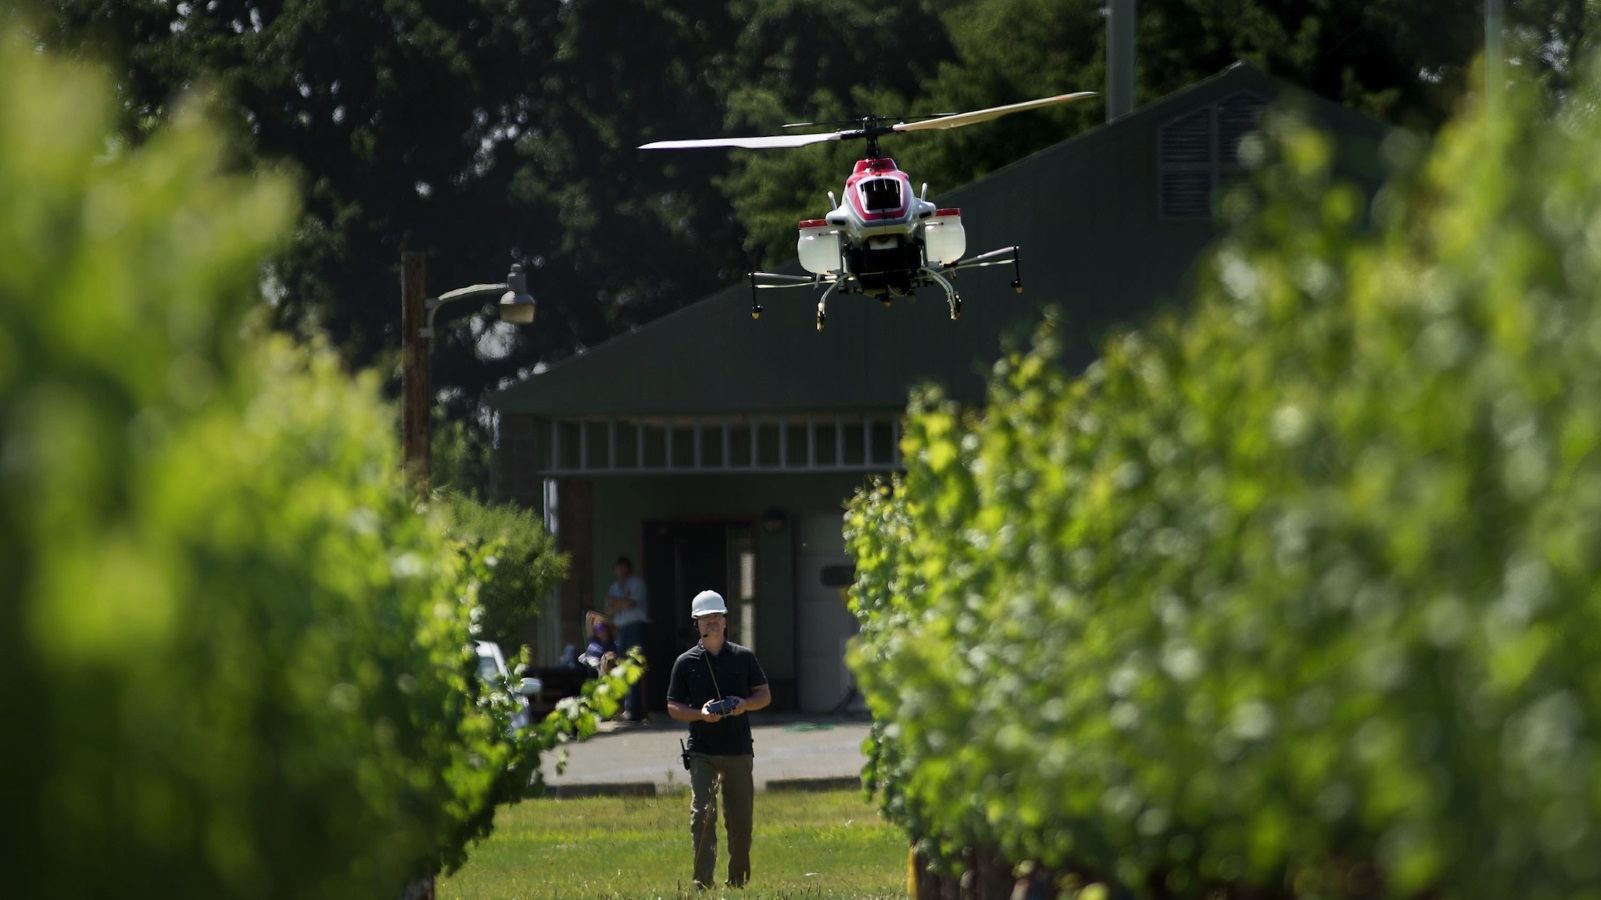 Farming with Drones